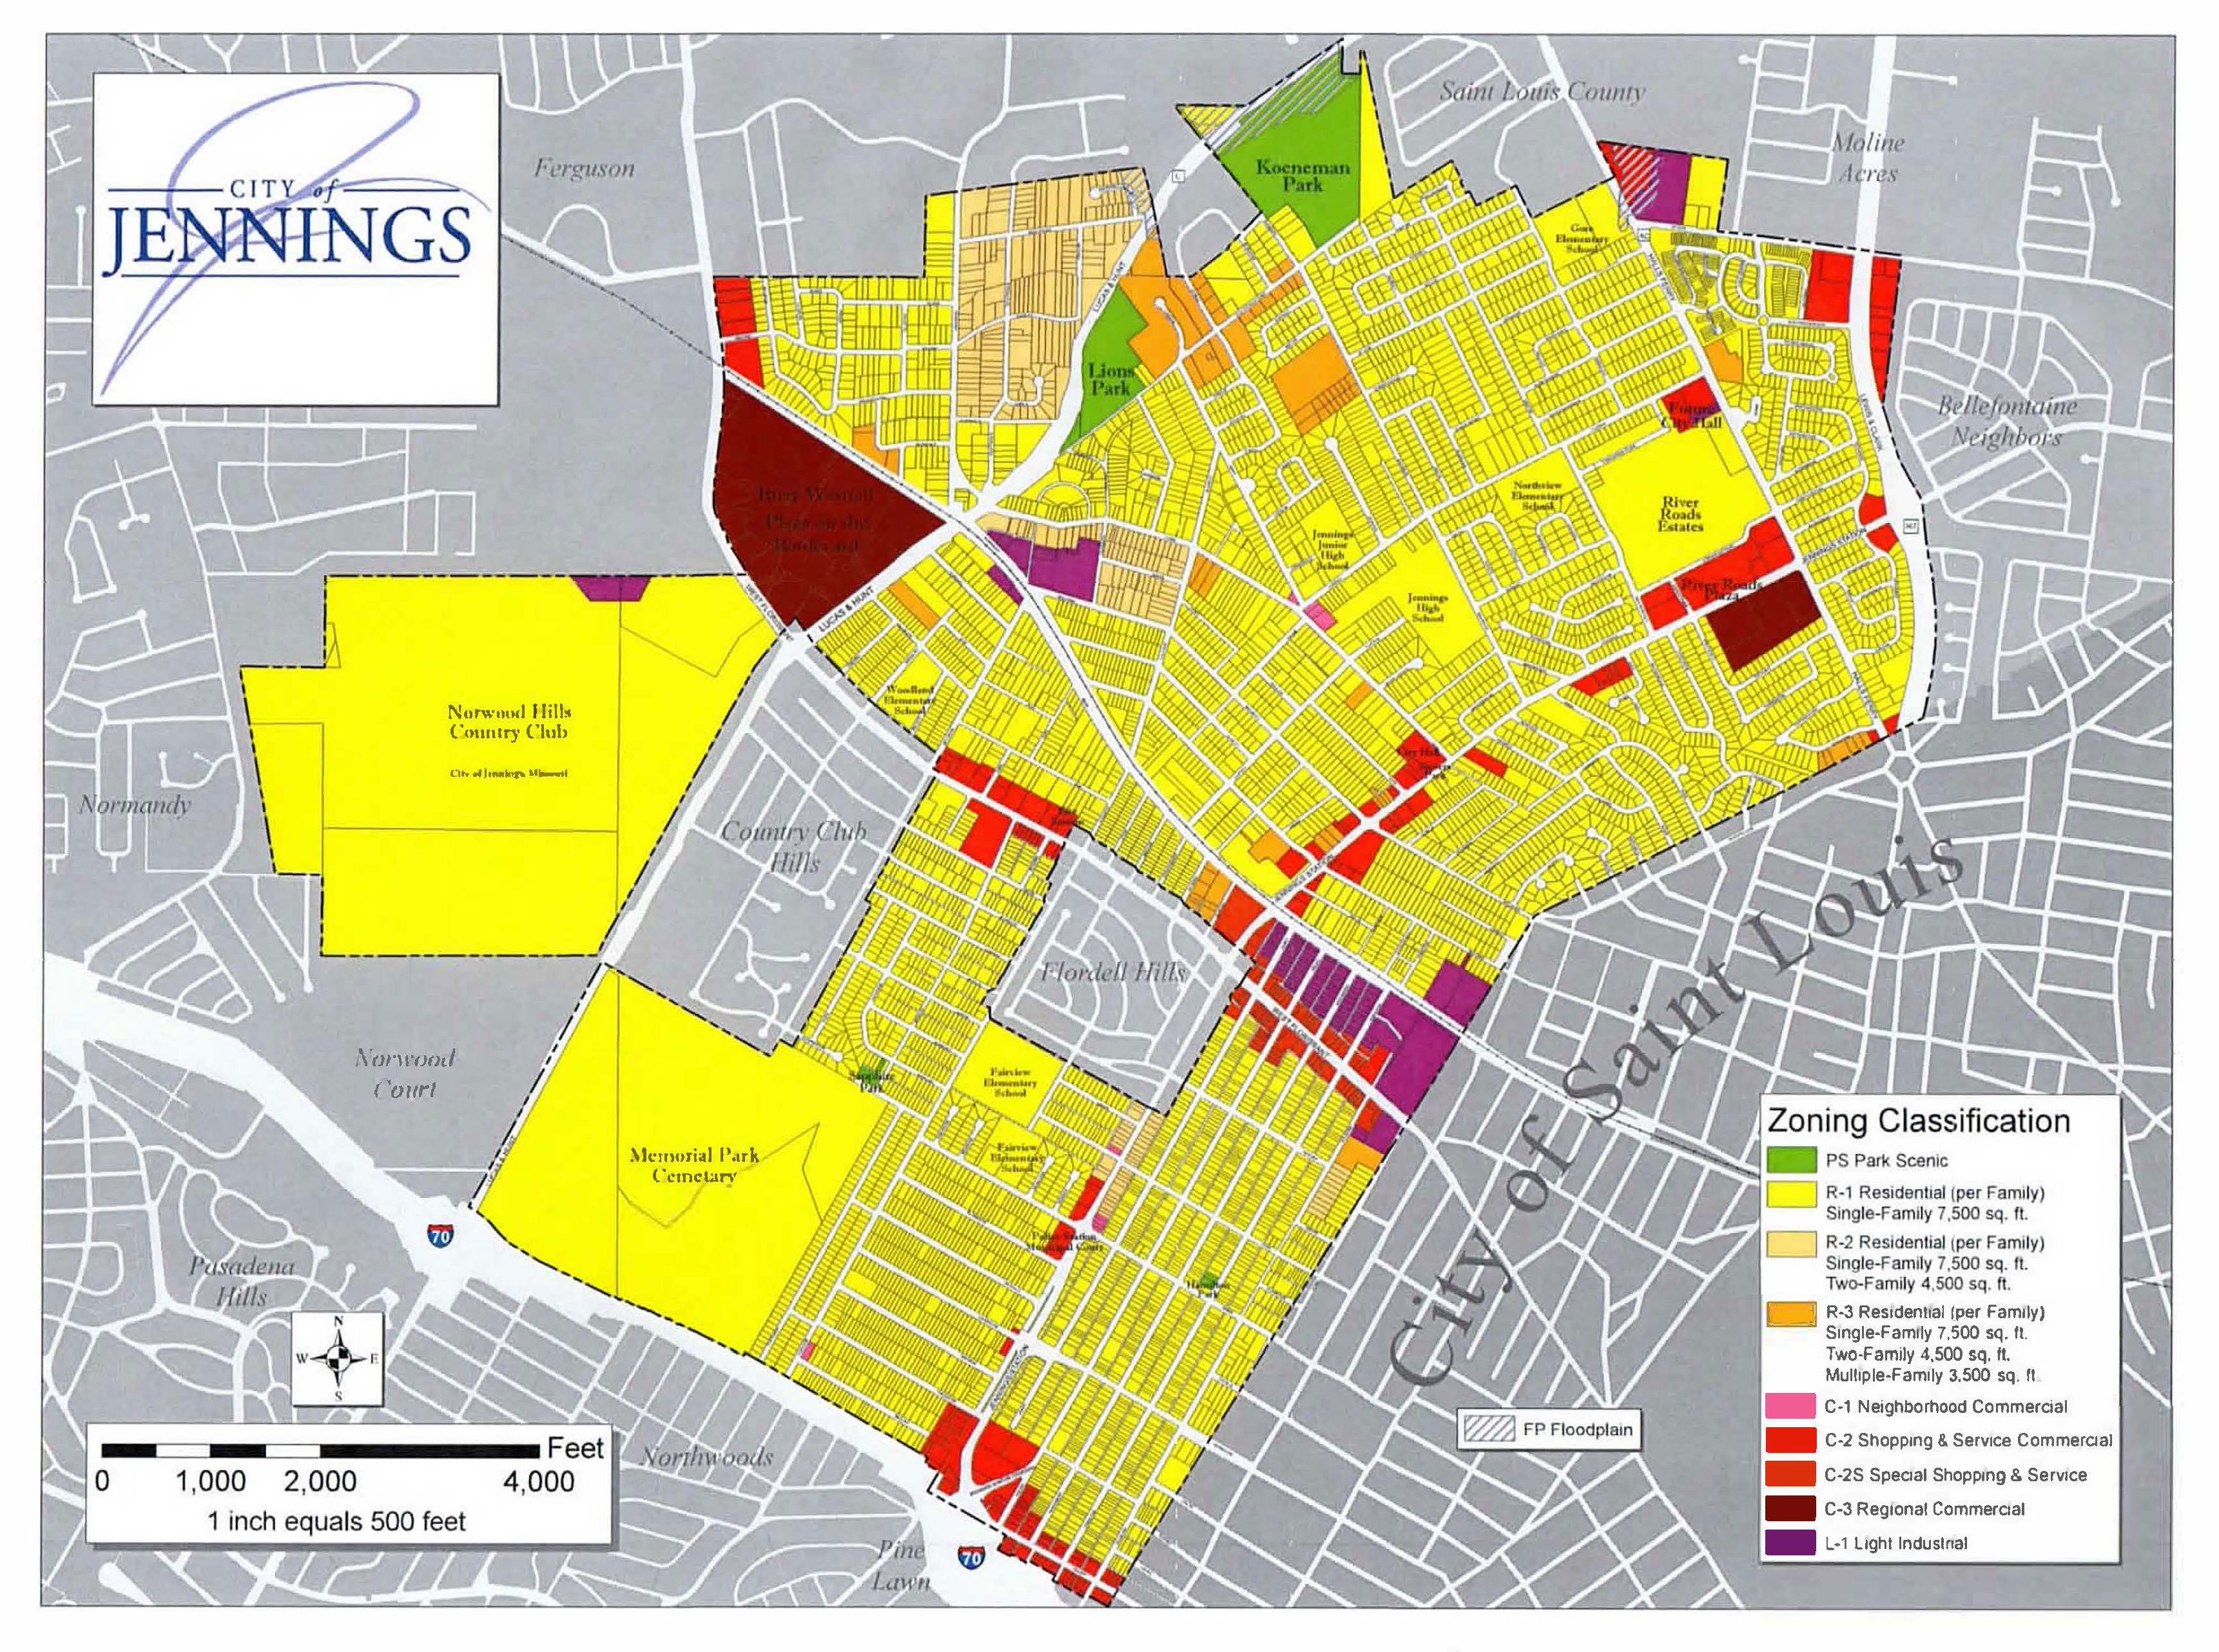 City of Jennings - Zoning Map